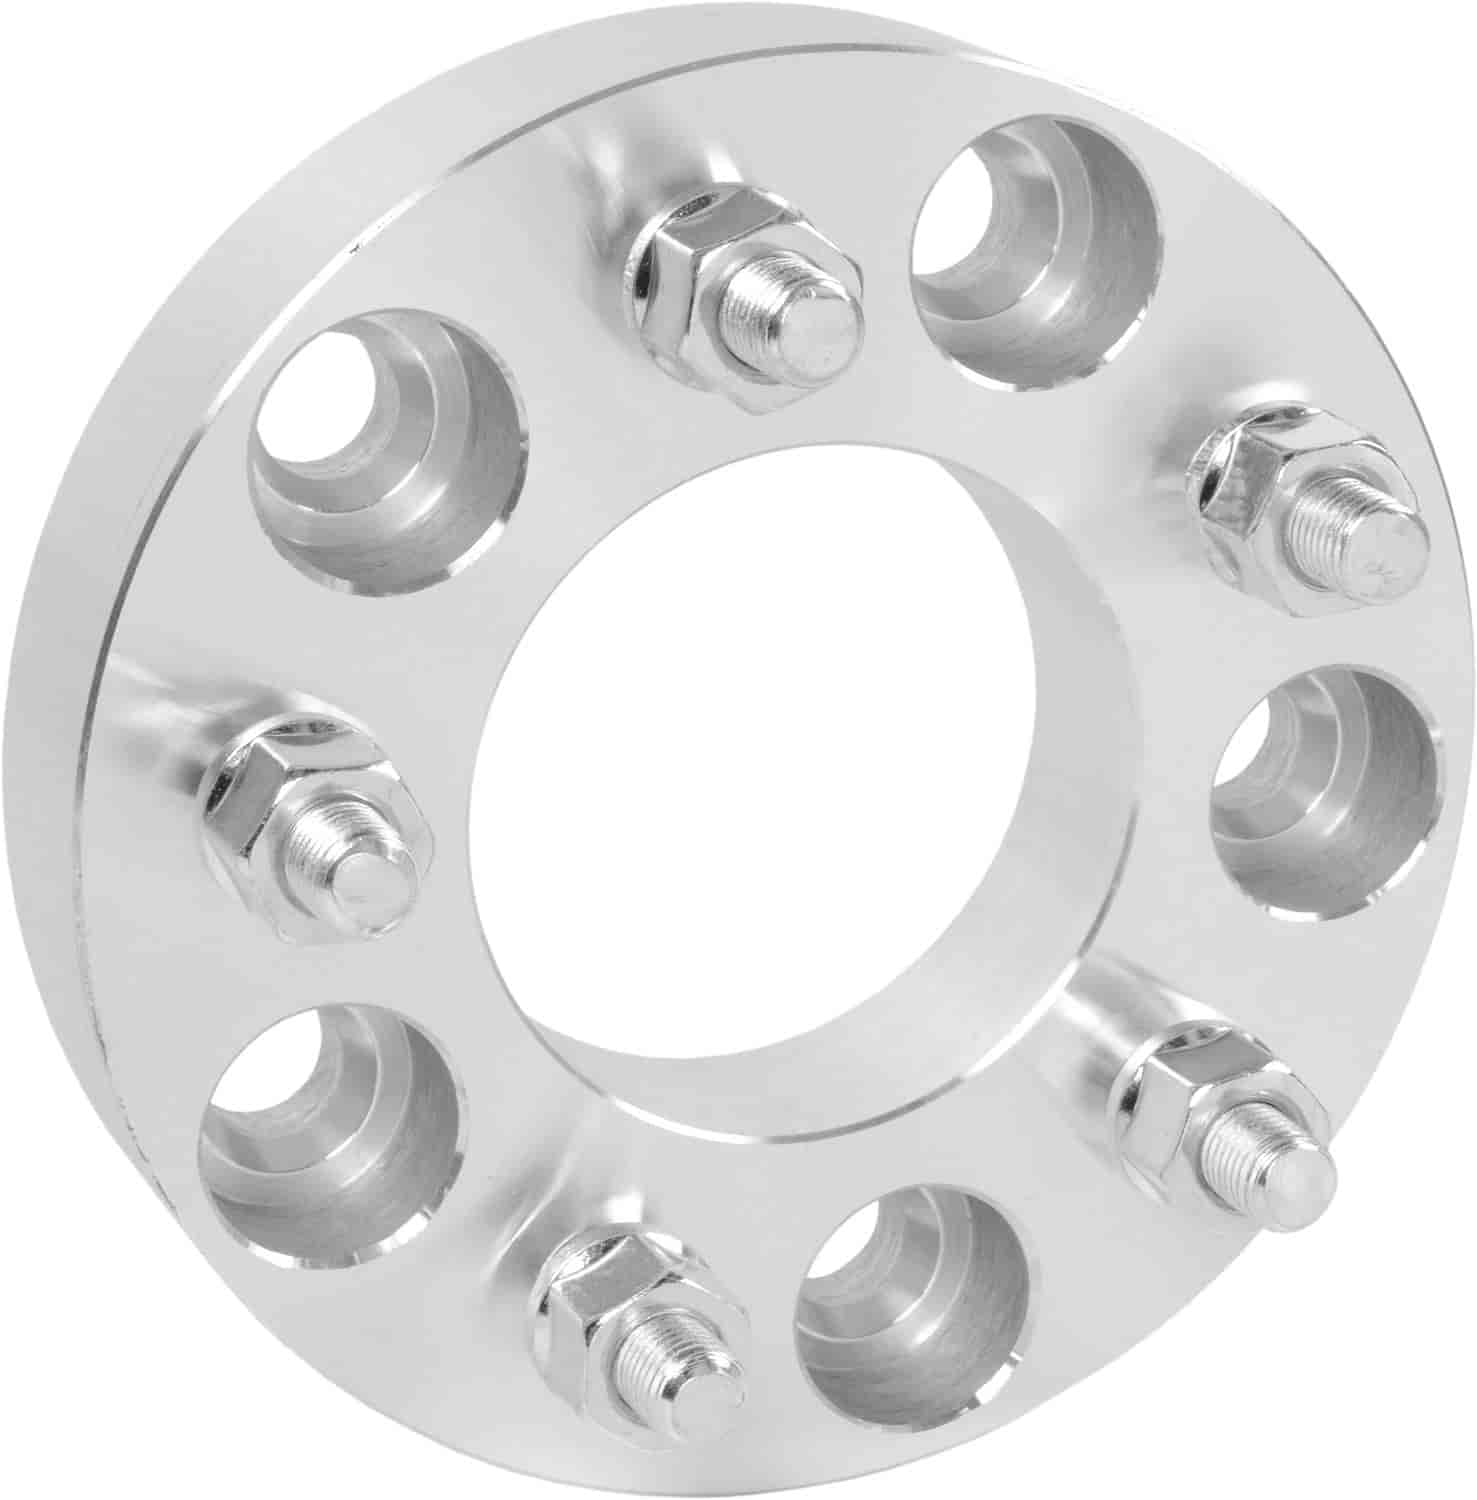 Billet Aluminum Wheel Adapter Adapts 5 x 5" Hub to 5 x 4.75" Wheel